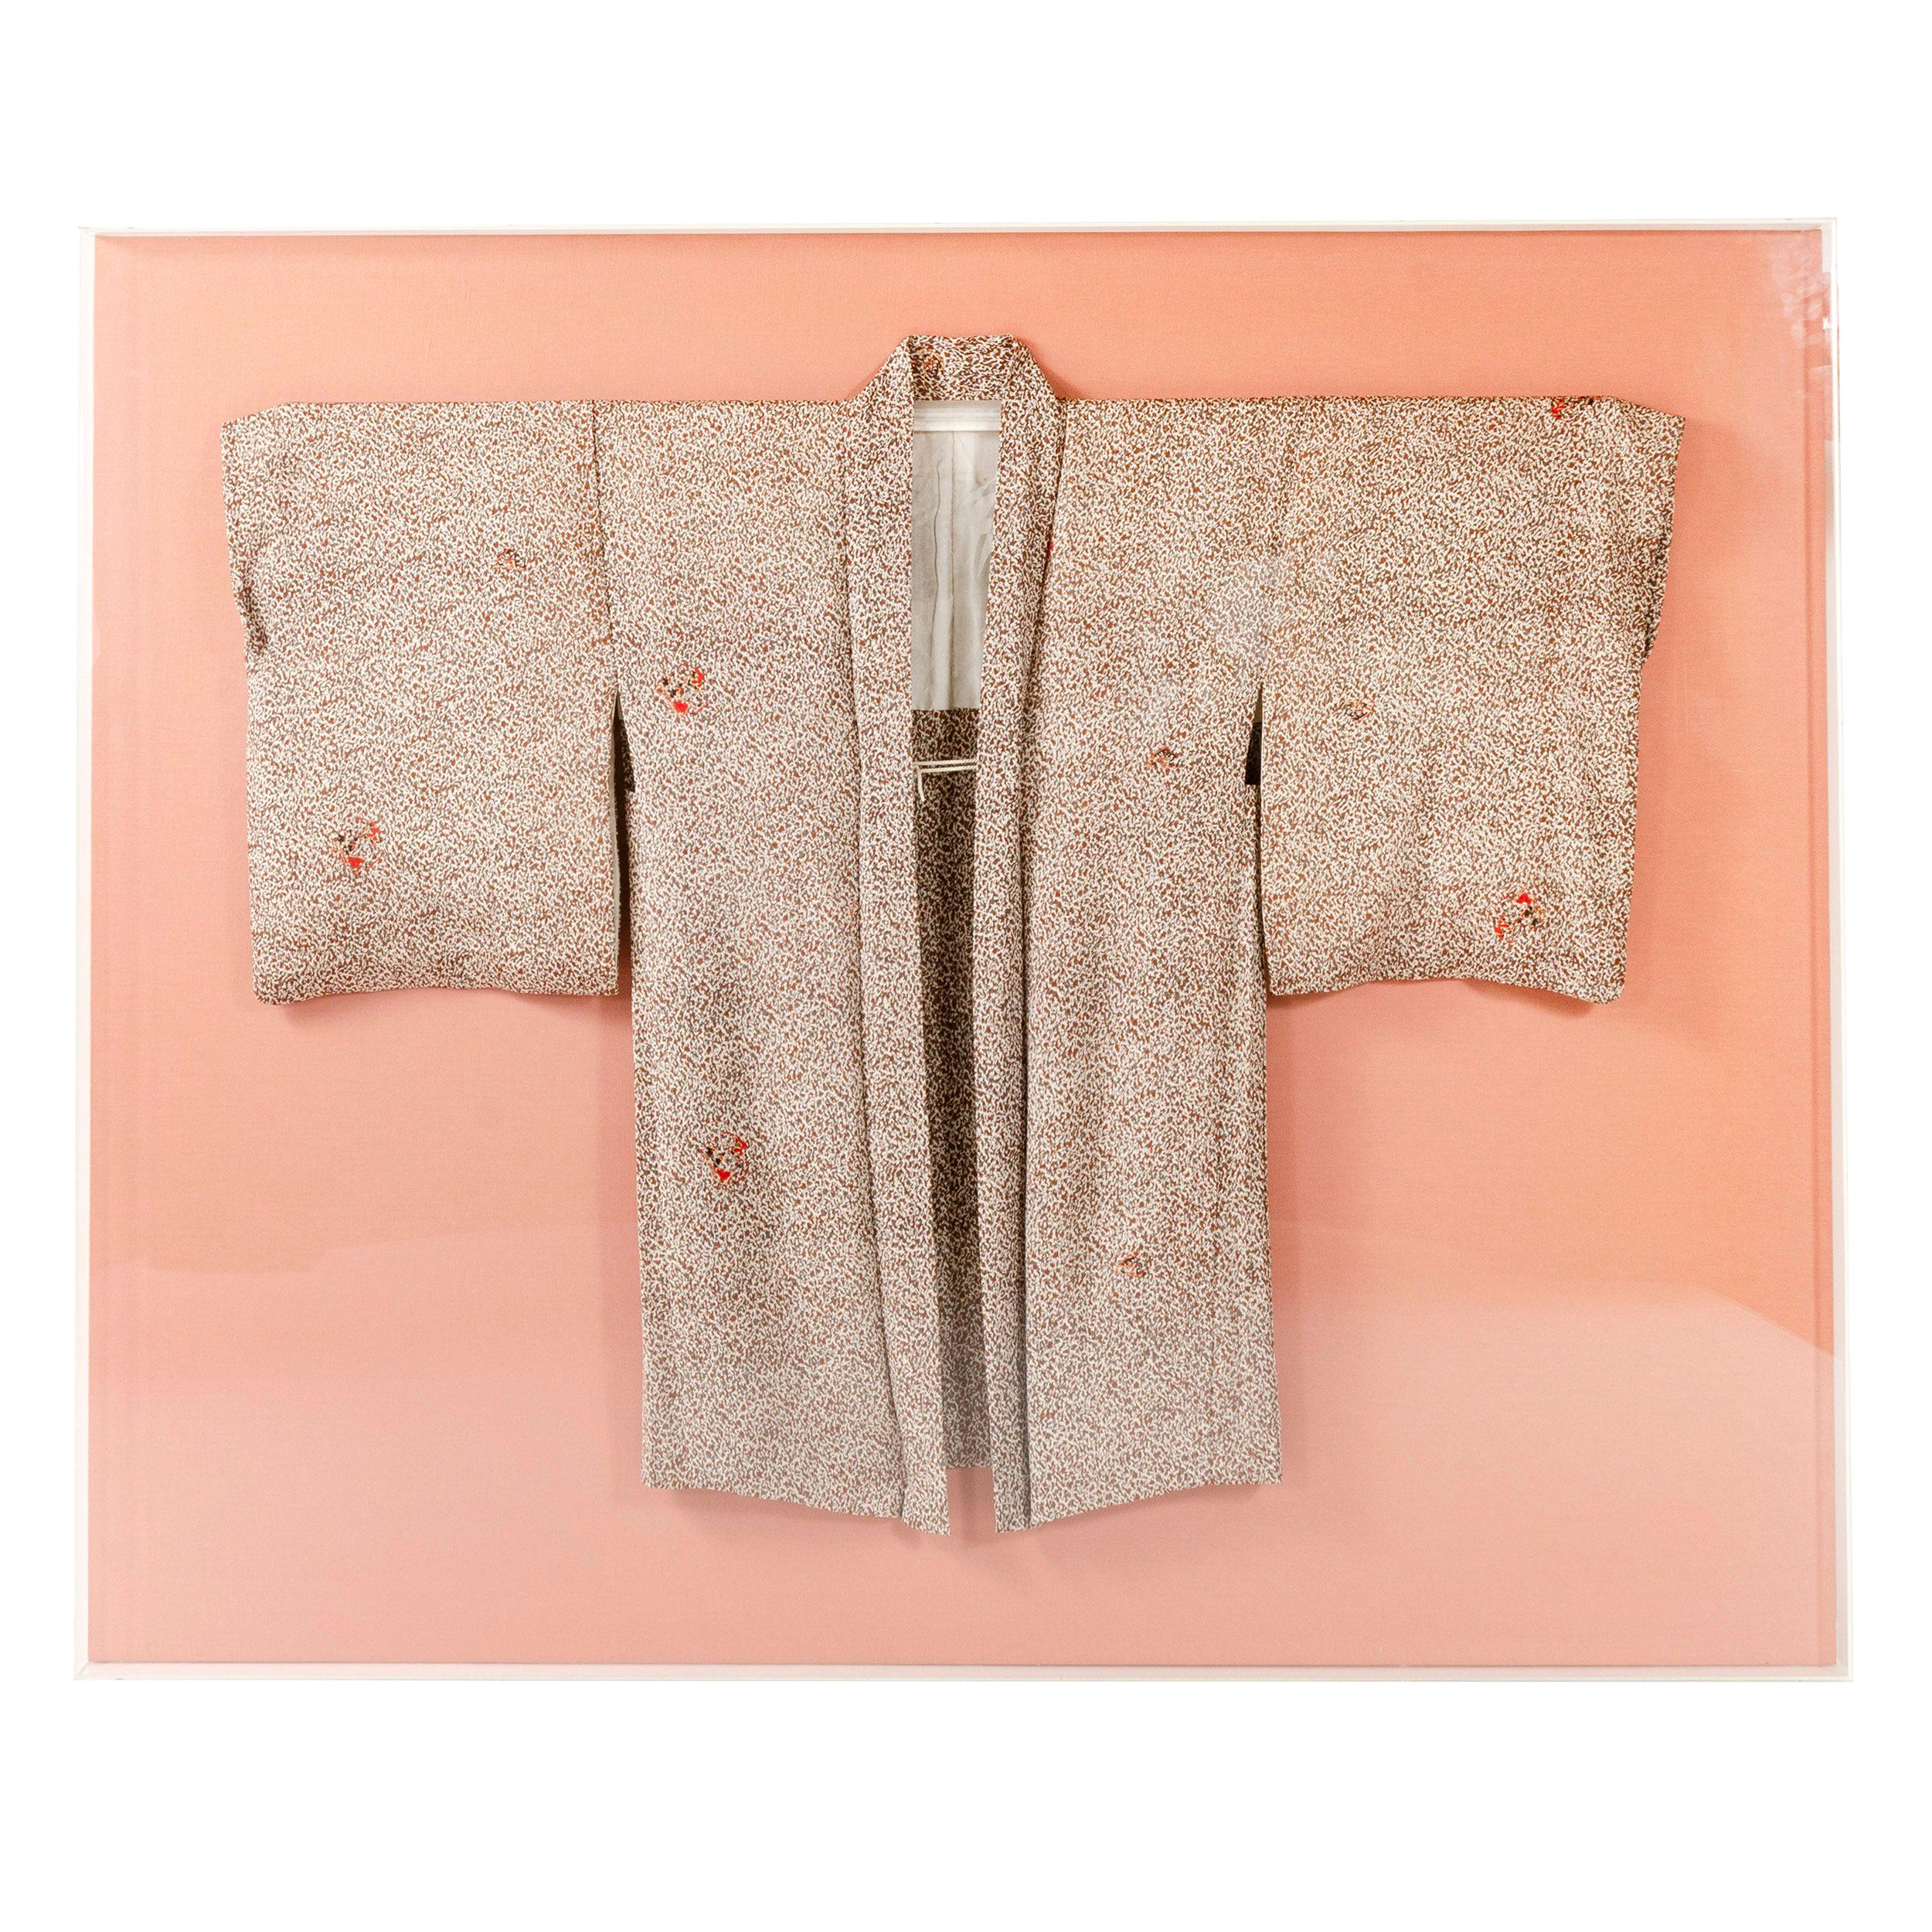 Haori Jacket by Greg Copeland For Sale